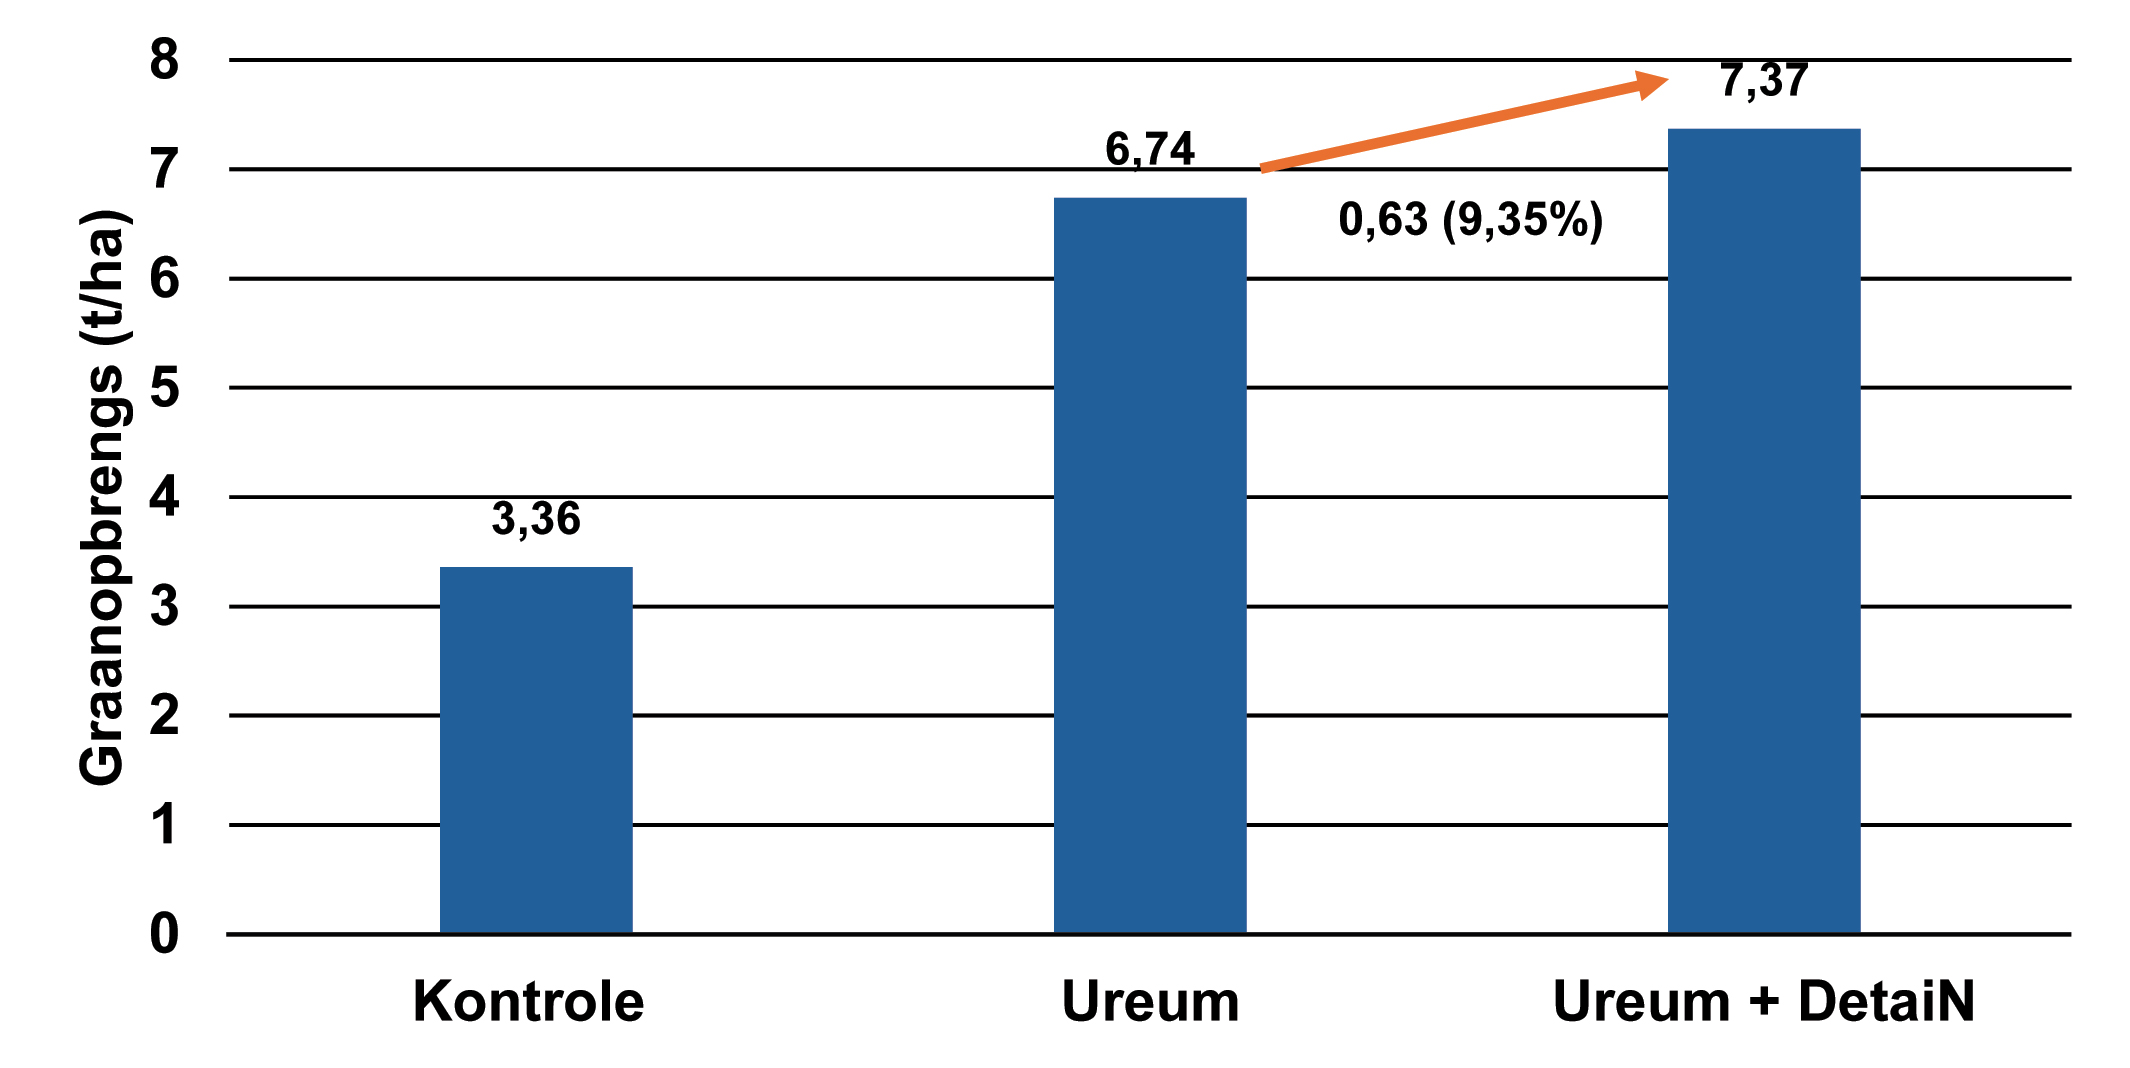 Ureumstabiliseerders verbeter N-BENUTTING en RENDEMENT